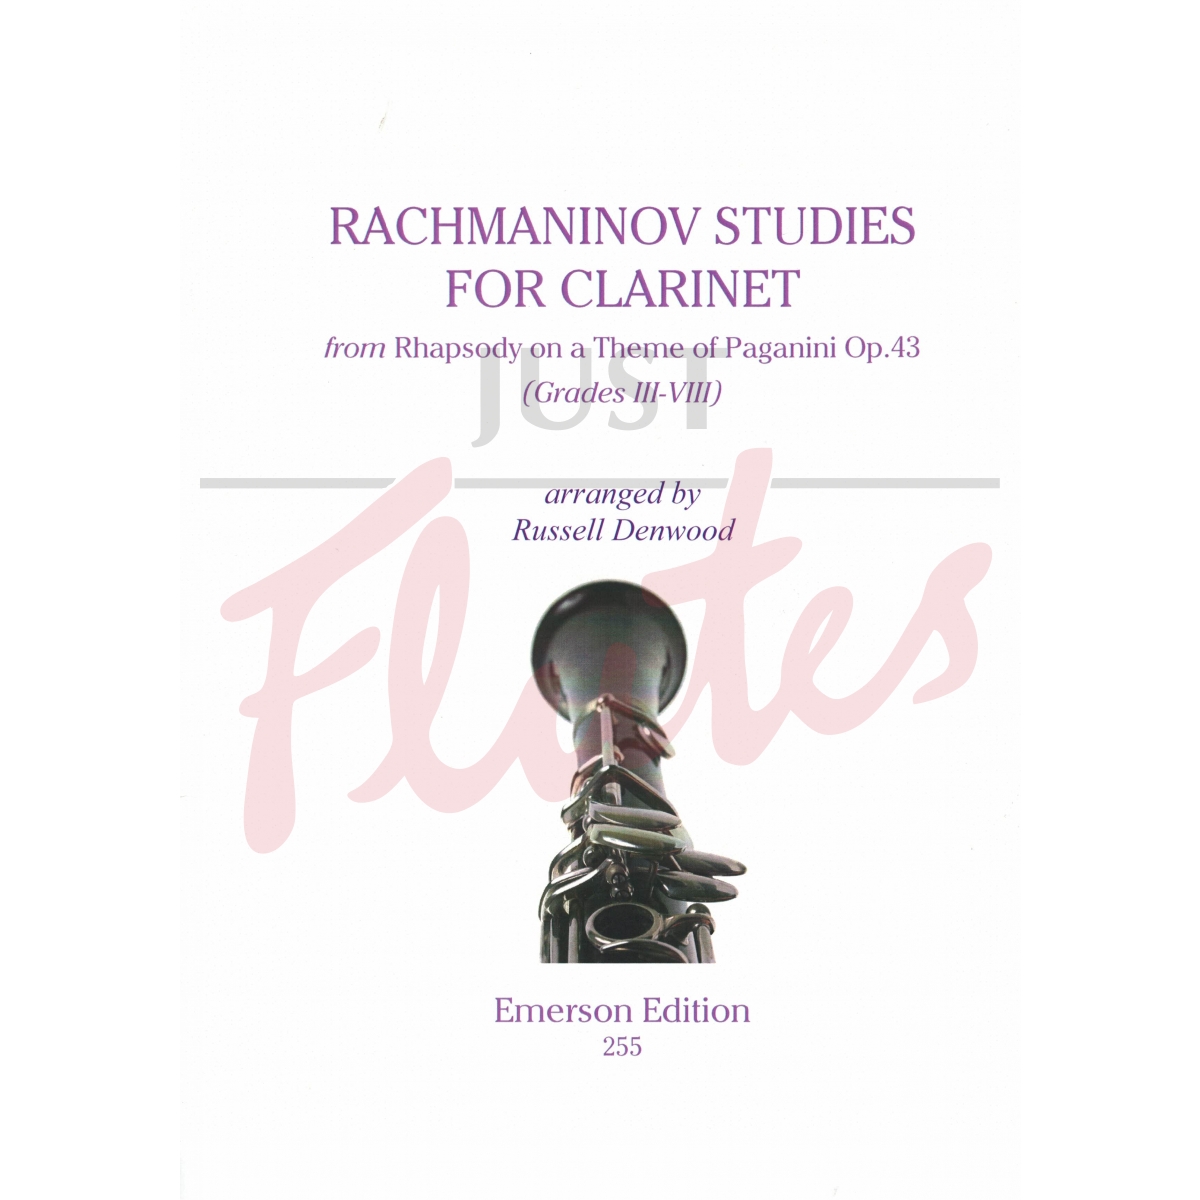 Rachmaninov Studies for Clarinet